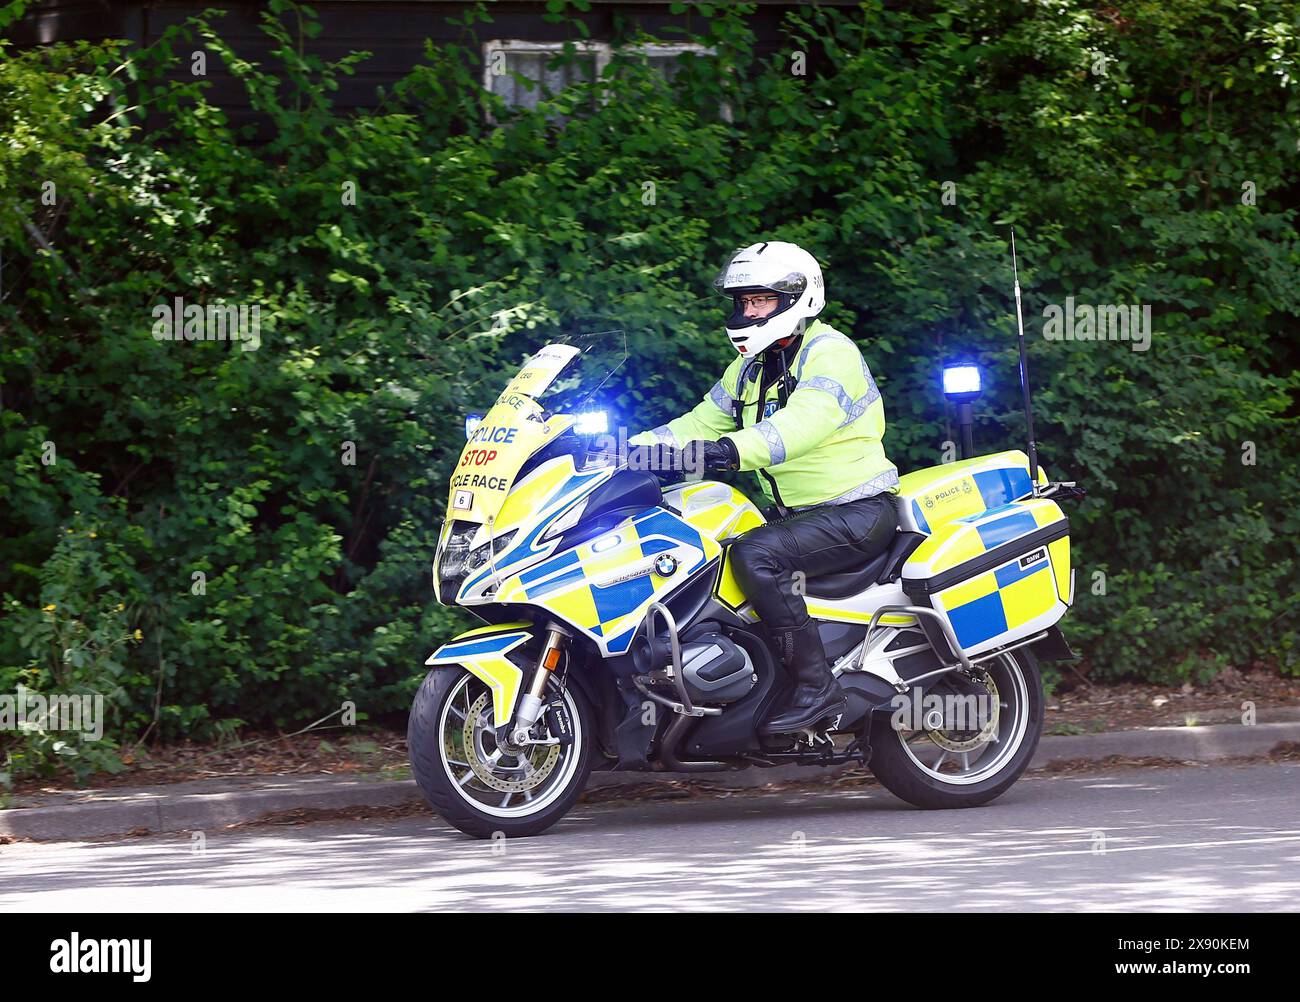 Police motorcyle. Stock Photo